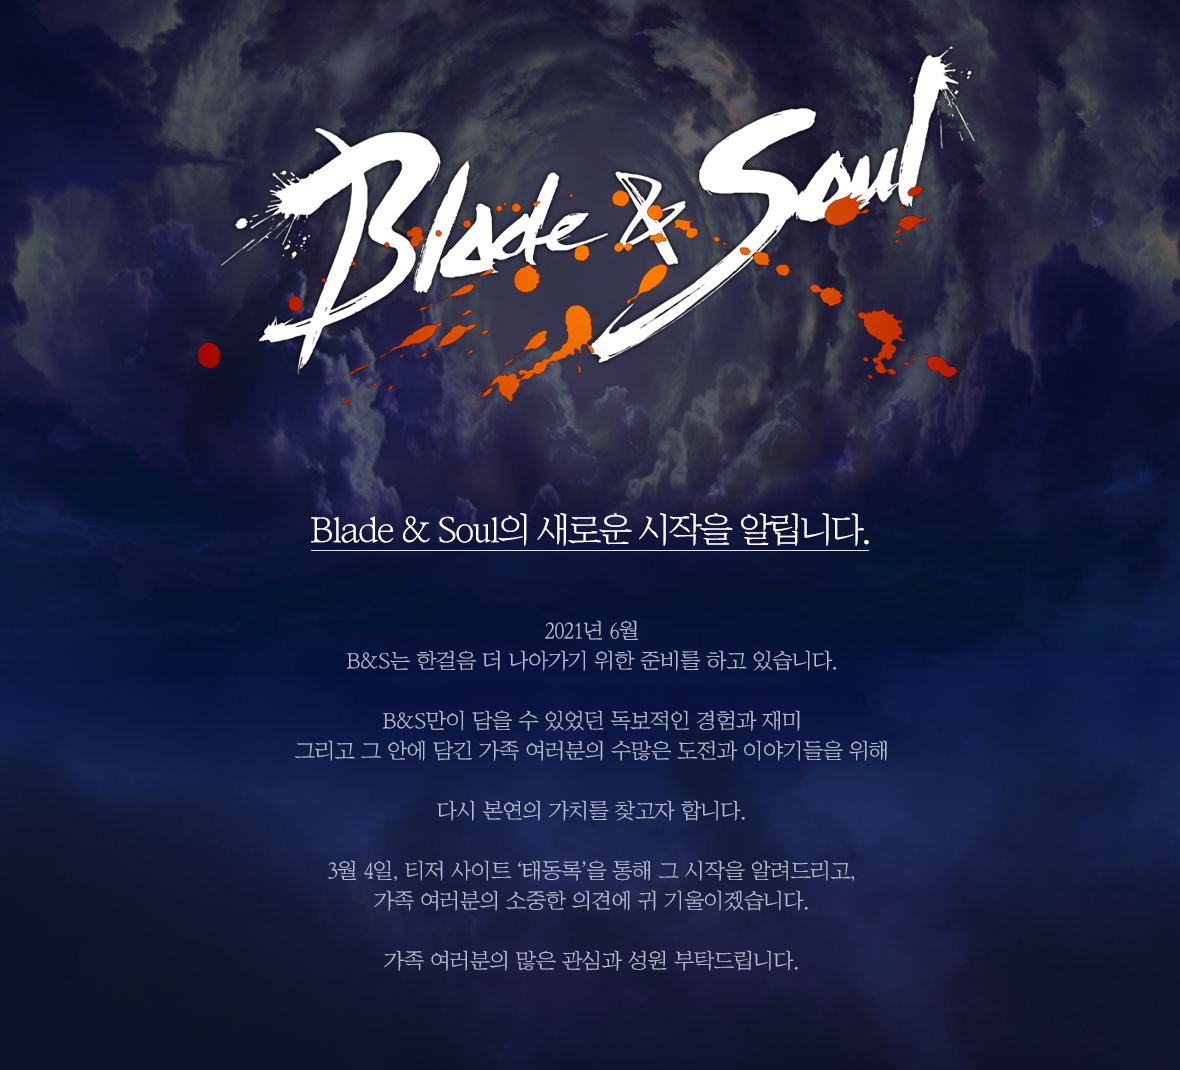 Blade Soul June 2021 New Beginning Teaser Notice